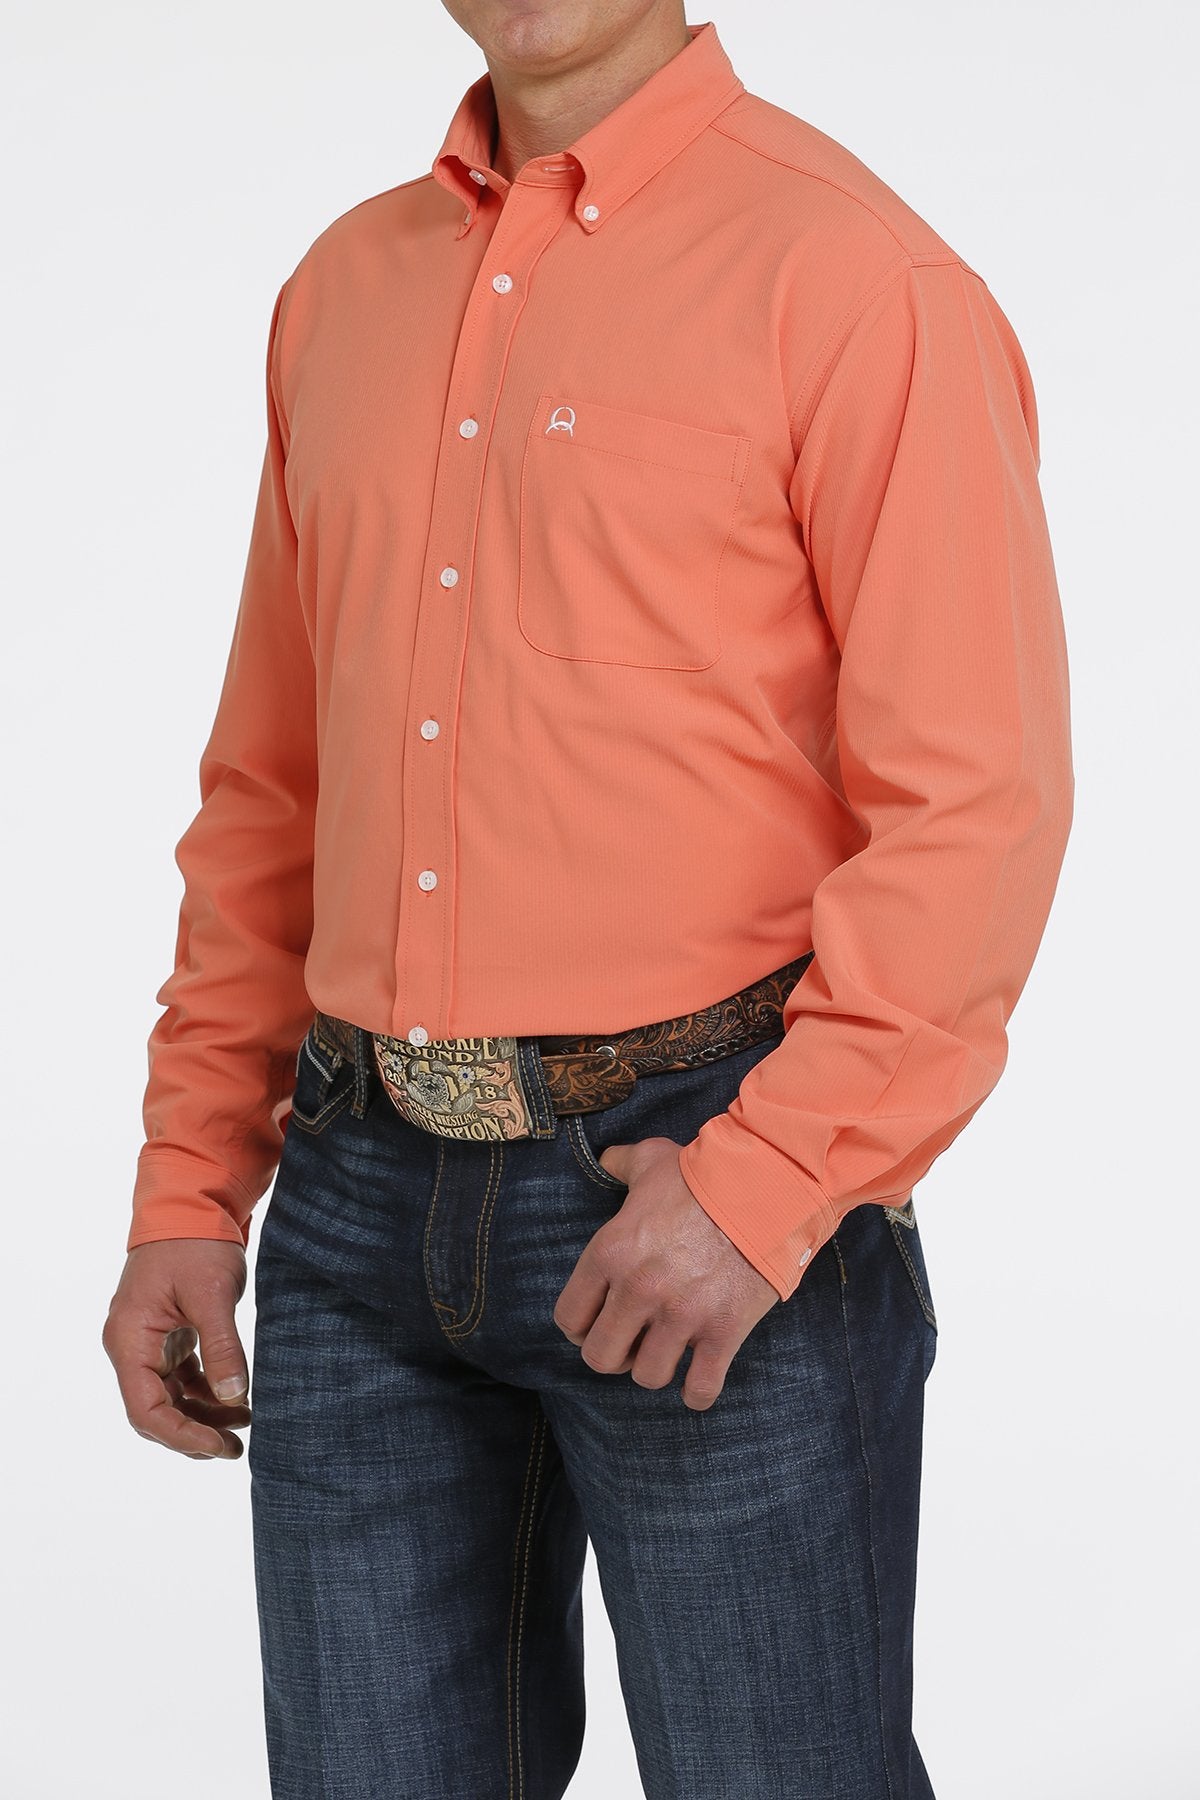 Cinch Mens ArenaFlex Long Sleeve Button-Down Shirt - Coral MTW1862015